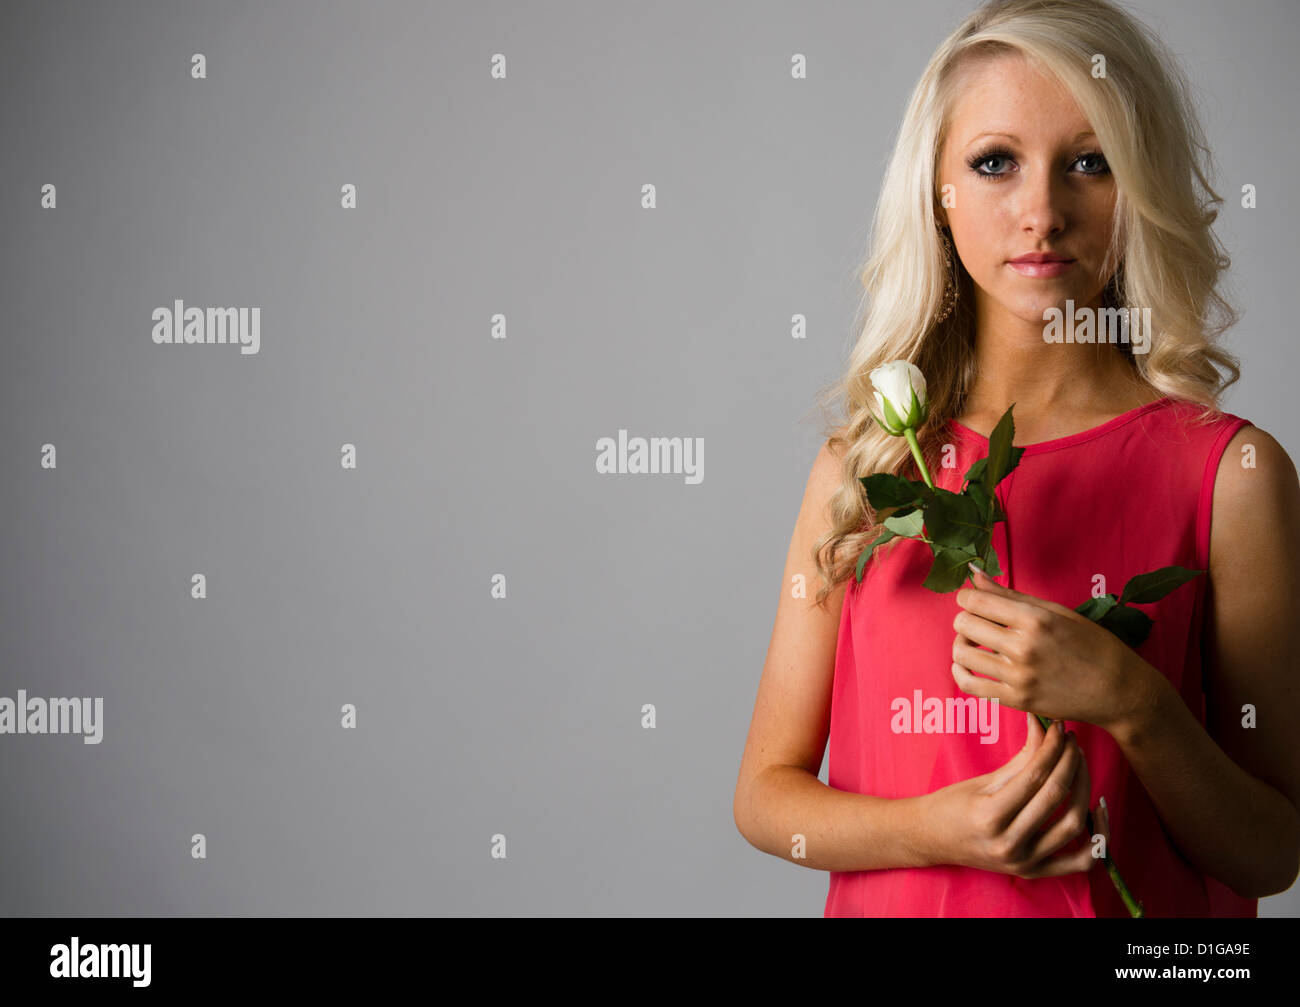 slim blonde chick rose